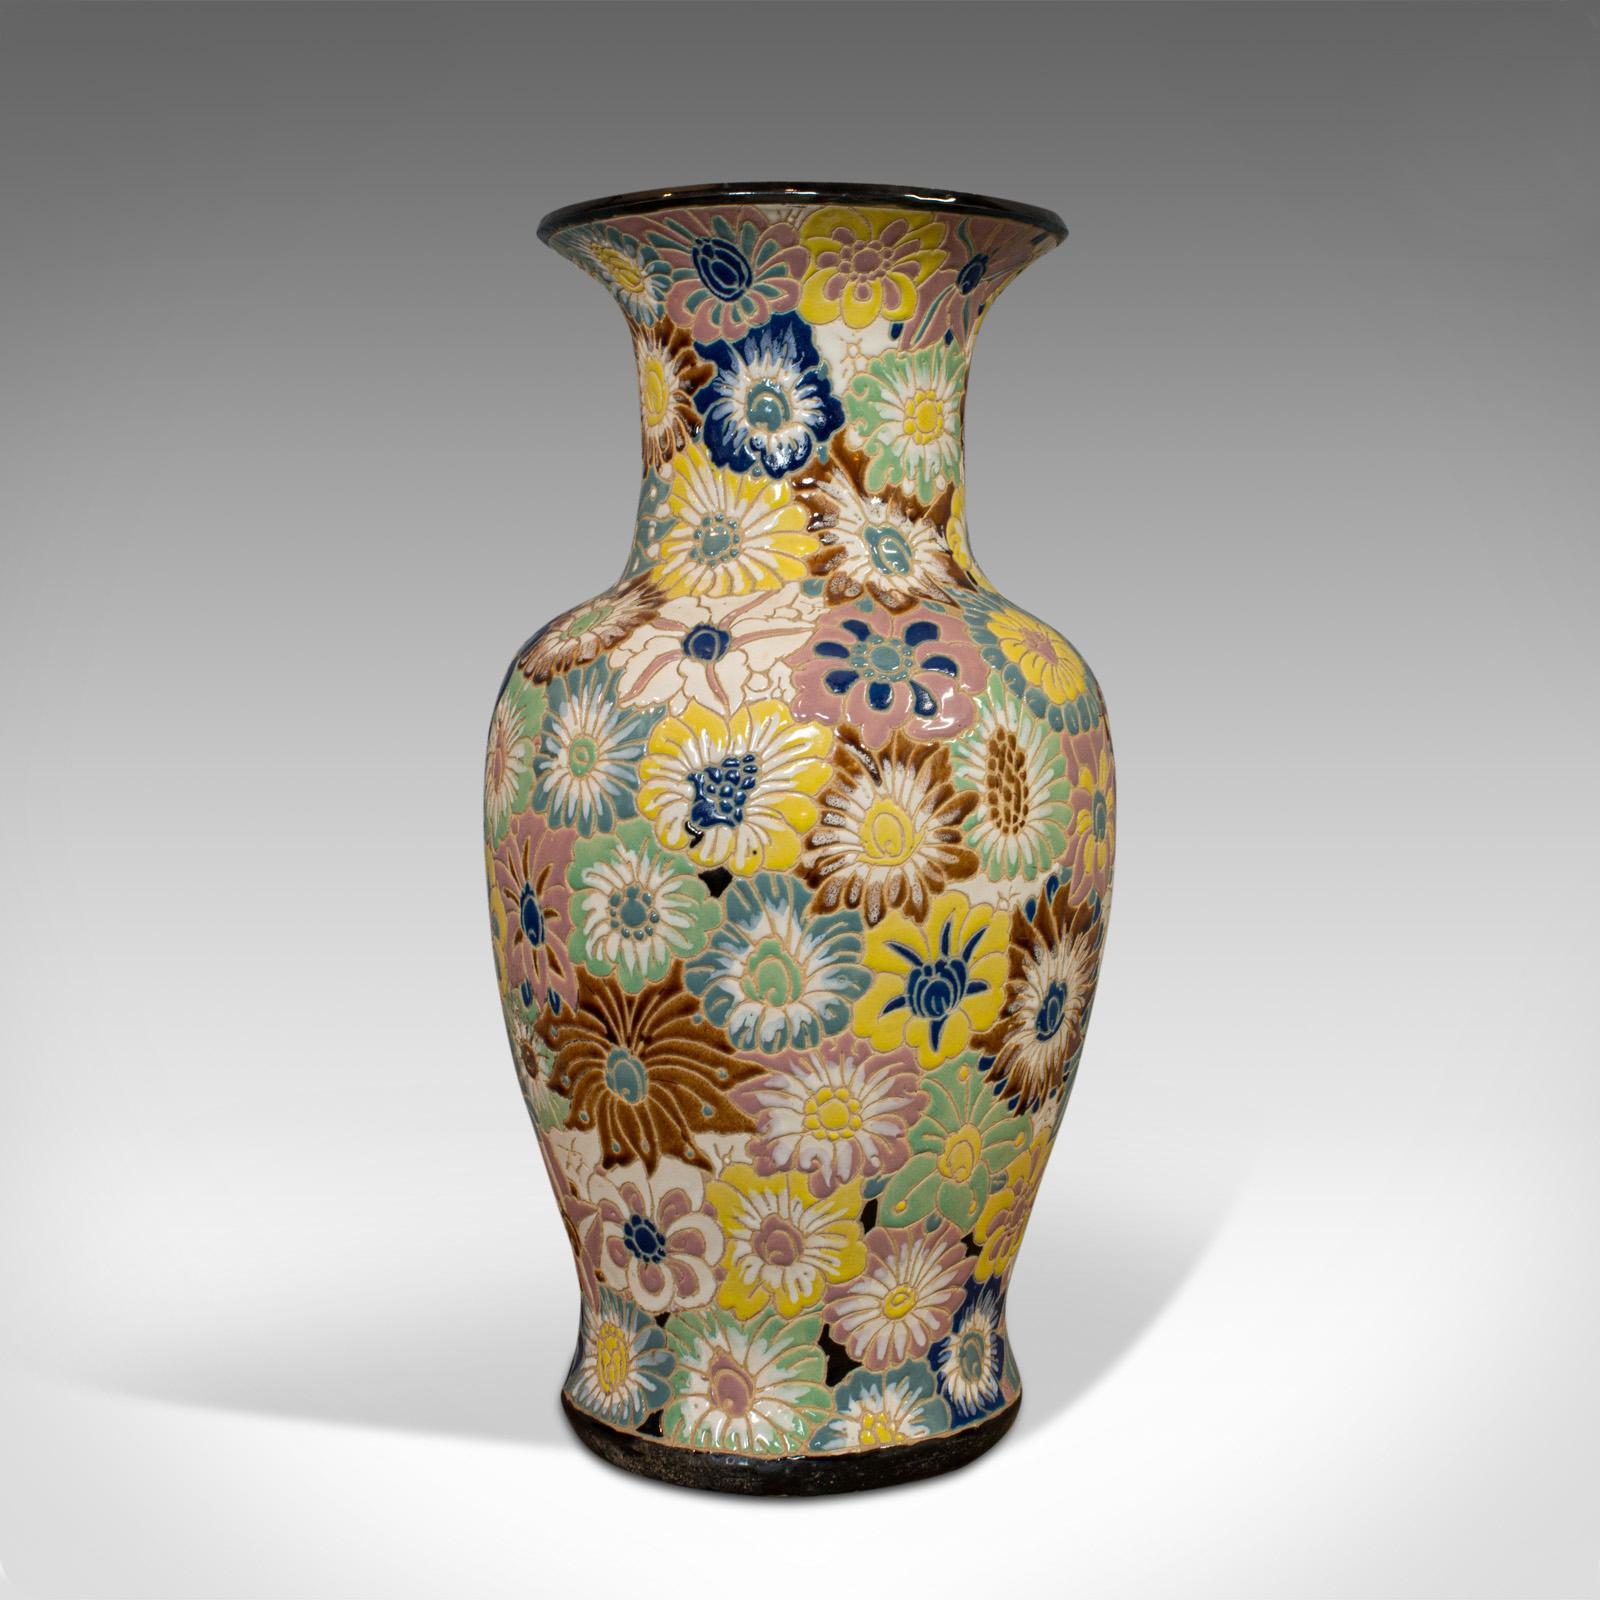 Chinese Export Vintage Decorative Flower Vase, Oriental, Ceramic, Decorative, Urn, Stick, Stand